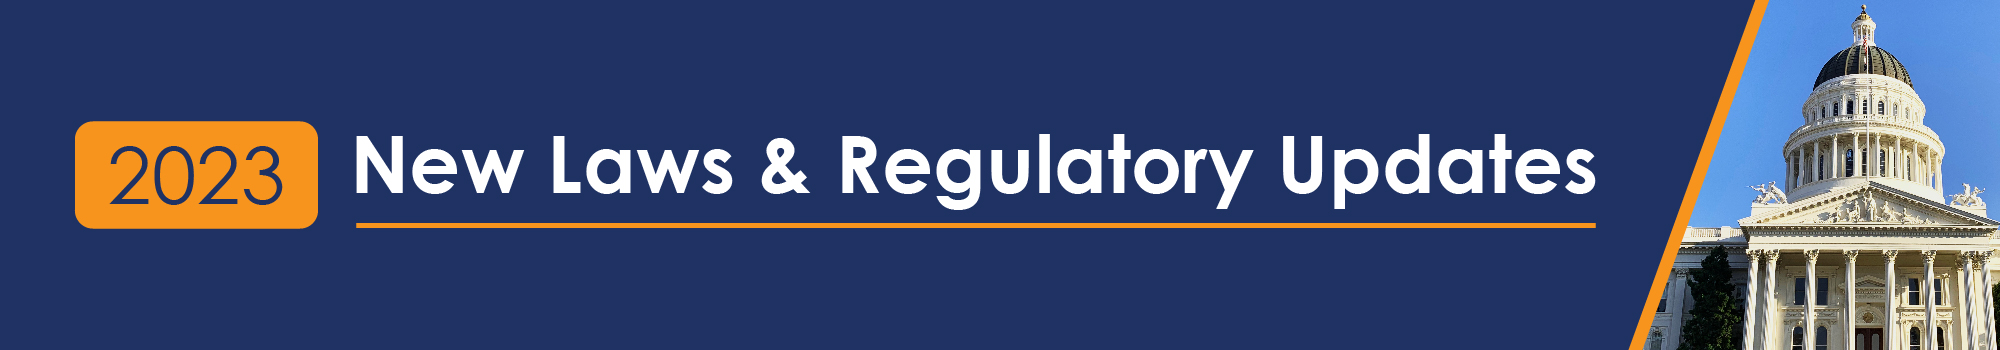 2023 New Laws & Regulatory Updates